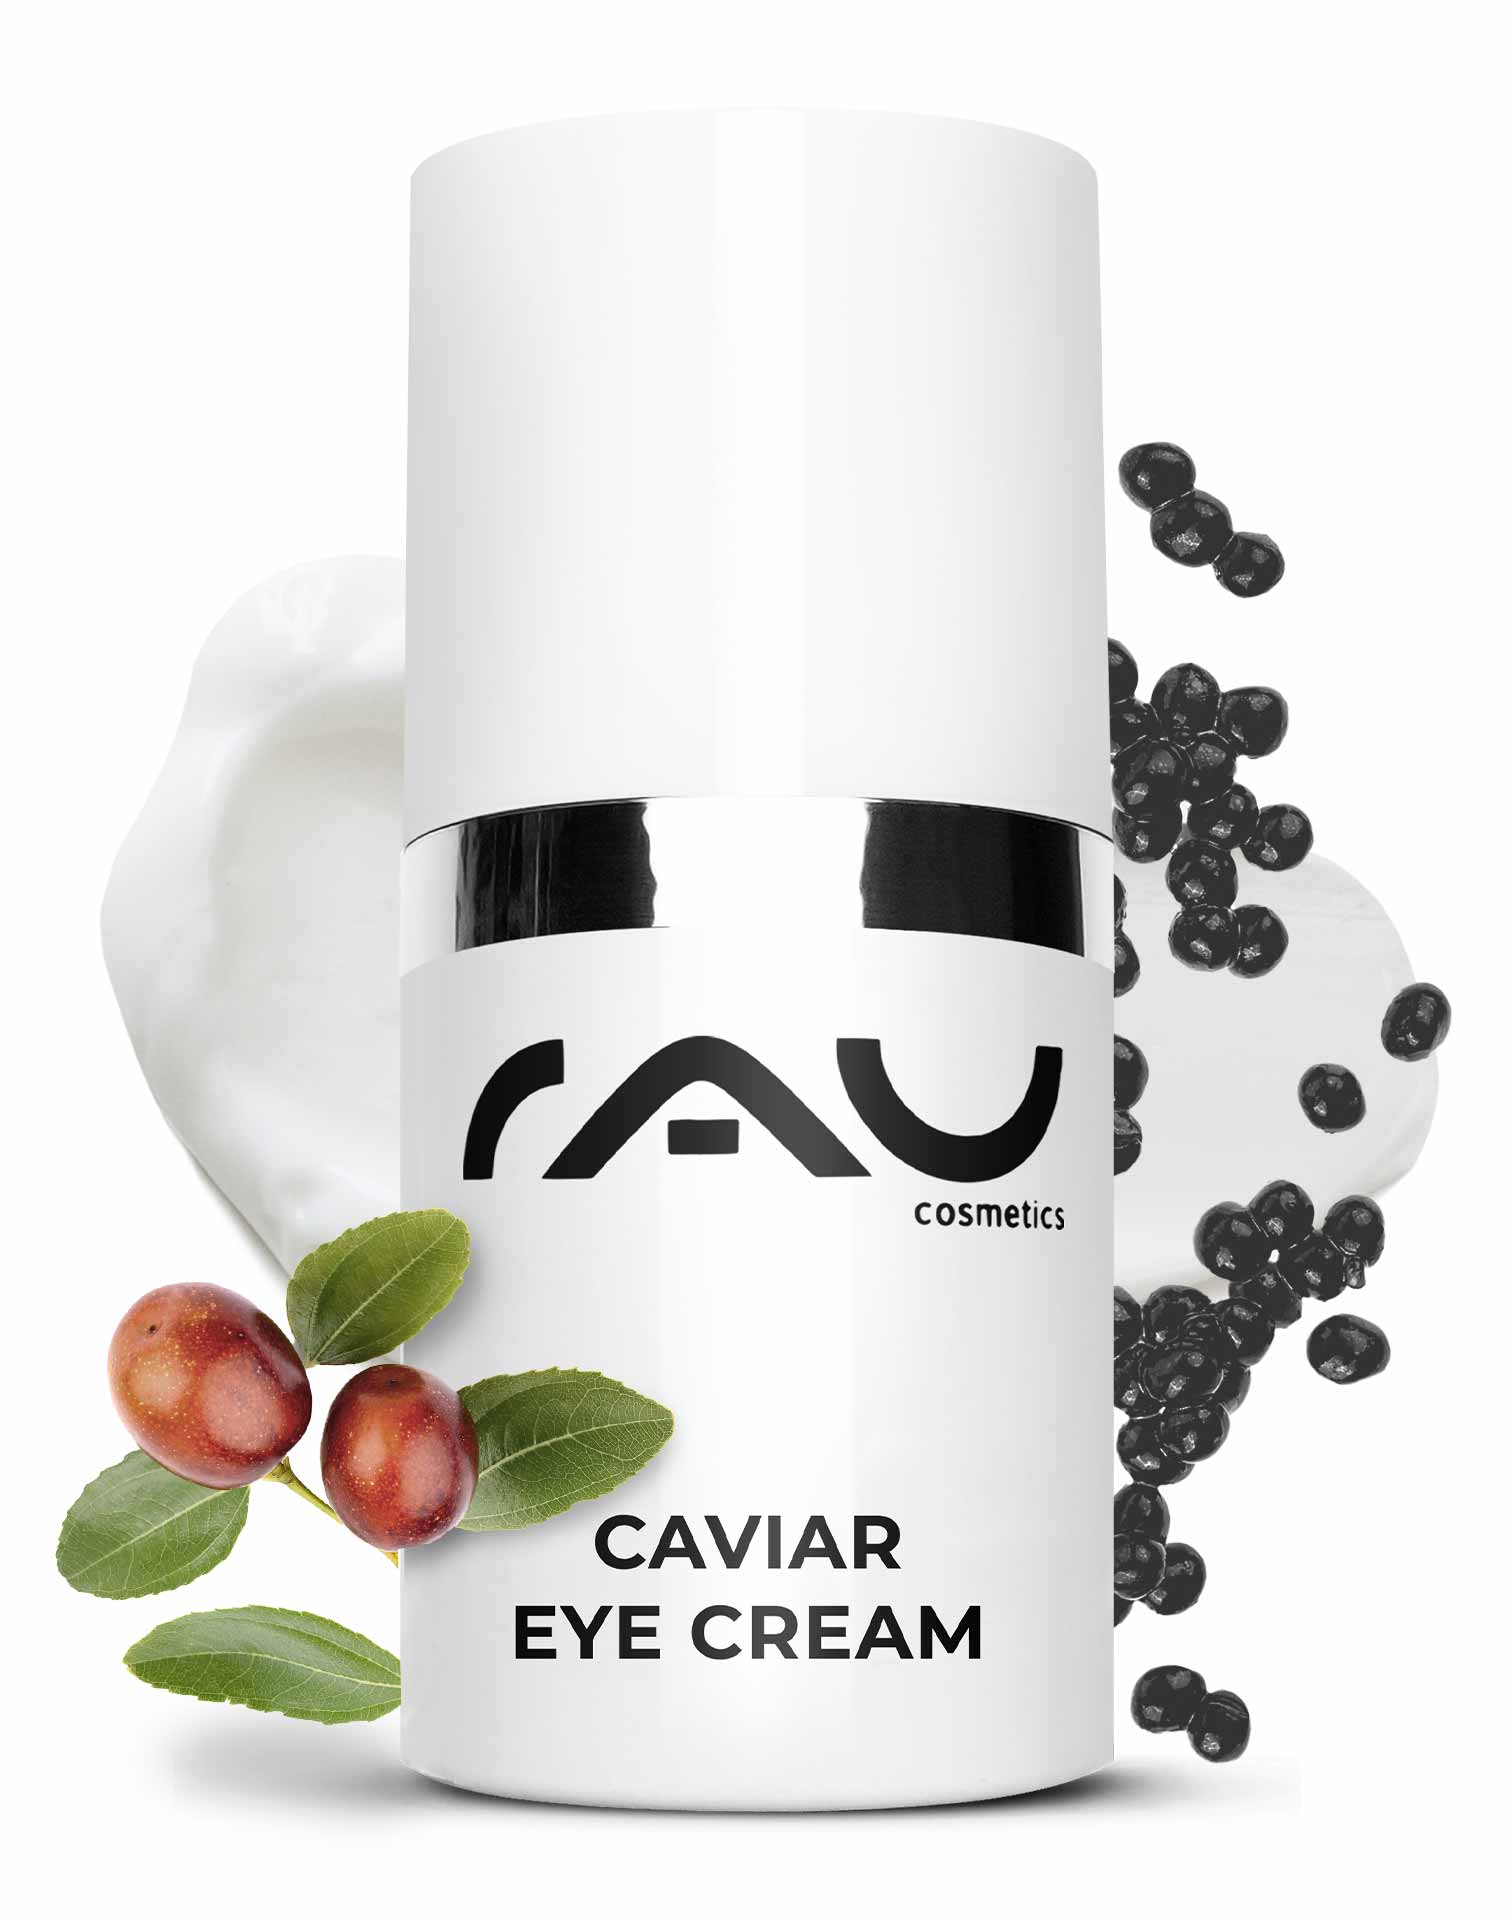 Caviar Eye Cream 15 ml for the mature eye area